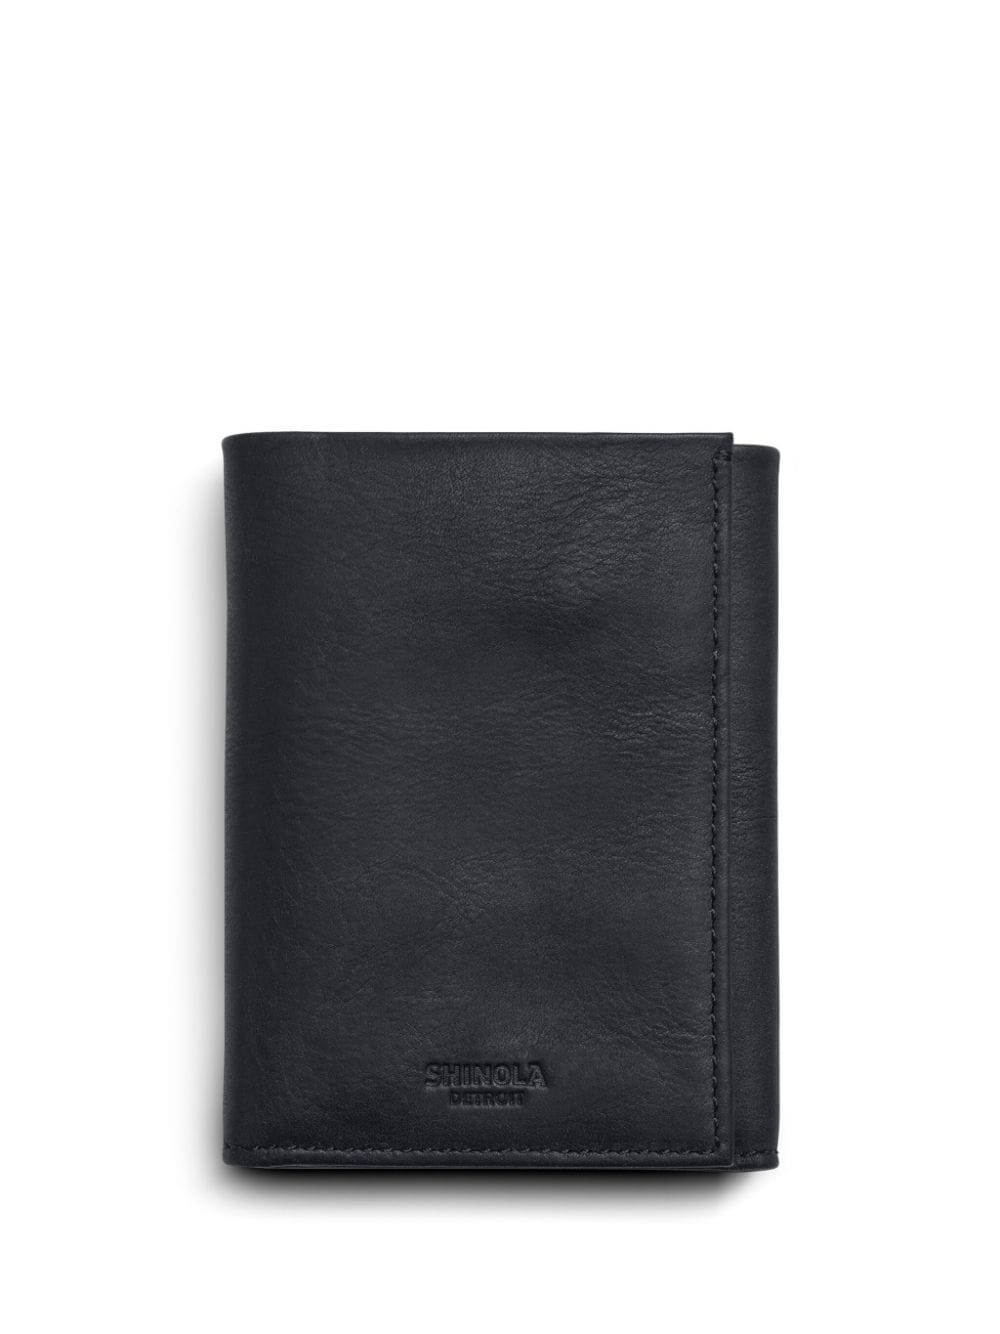 Shinola tri-fold leather wallet - Black von Shinola